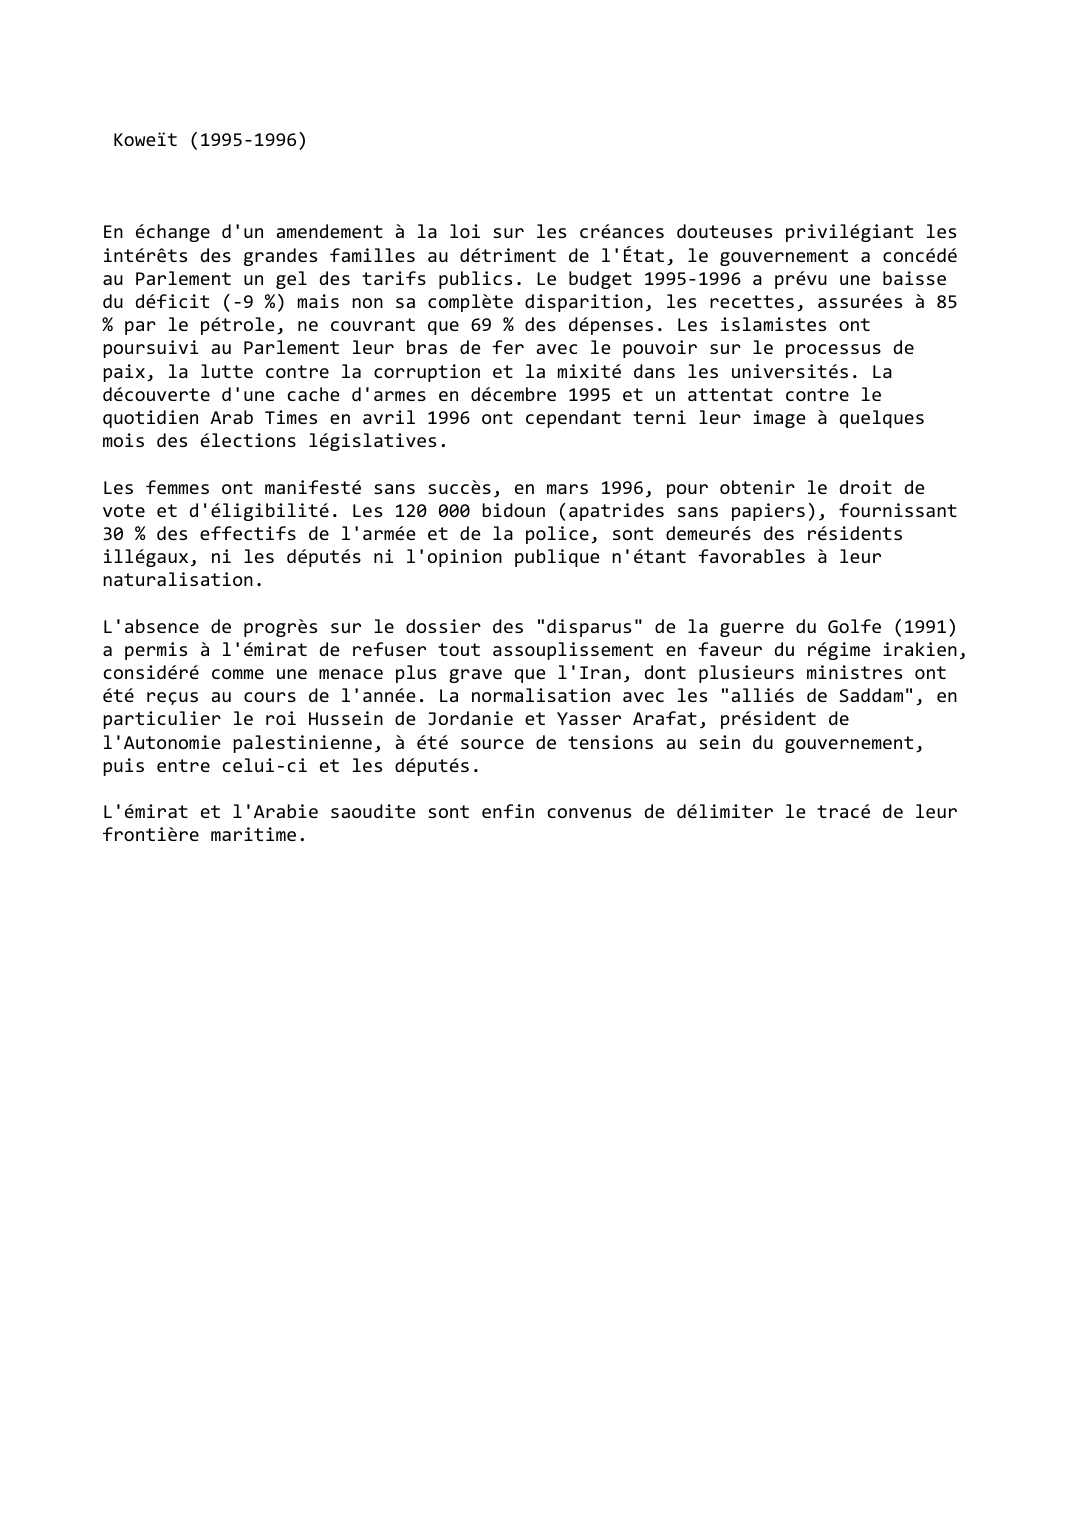 Prévisualisation du document Koweït (1995-1996)